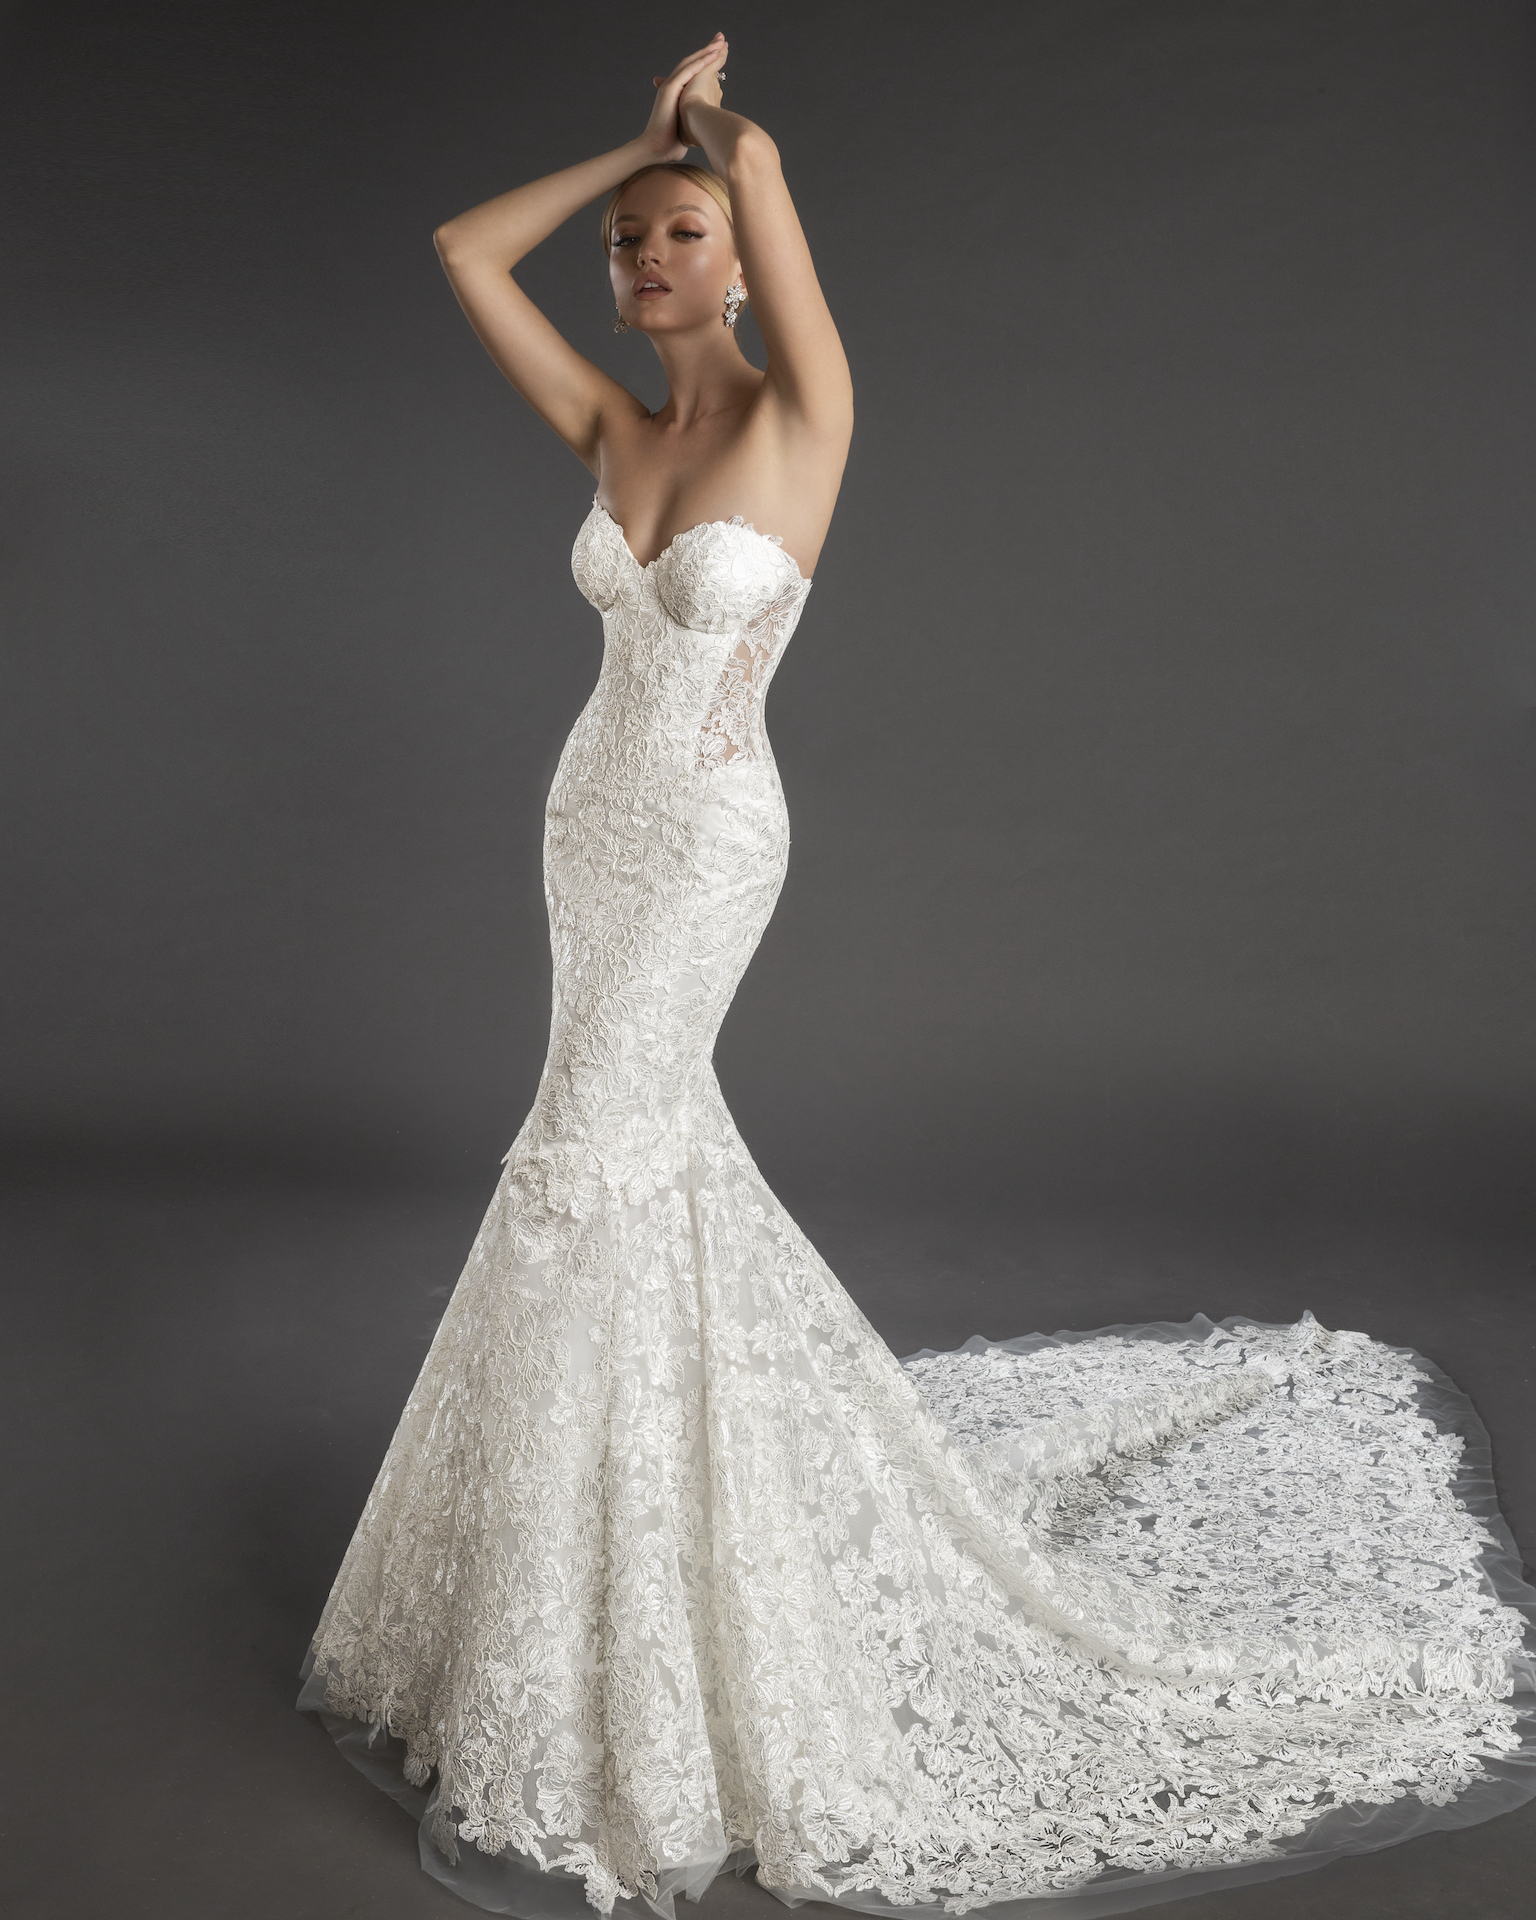 Strapless Sweetheart Neckline Lace Mermaid Wedding Dress Kleinfeld Bridal 9201